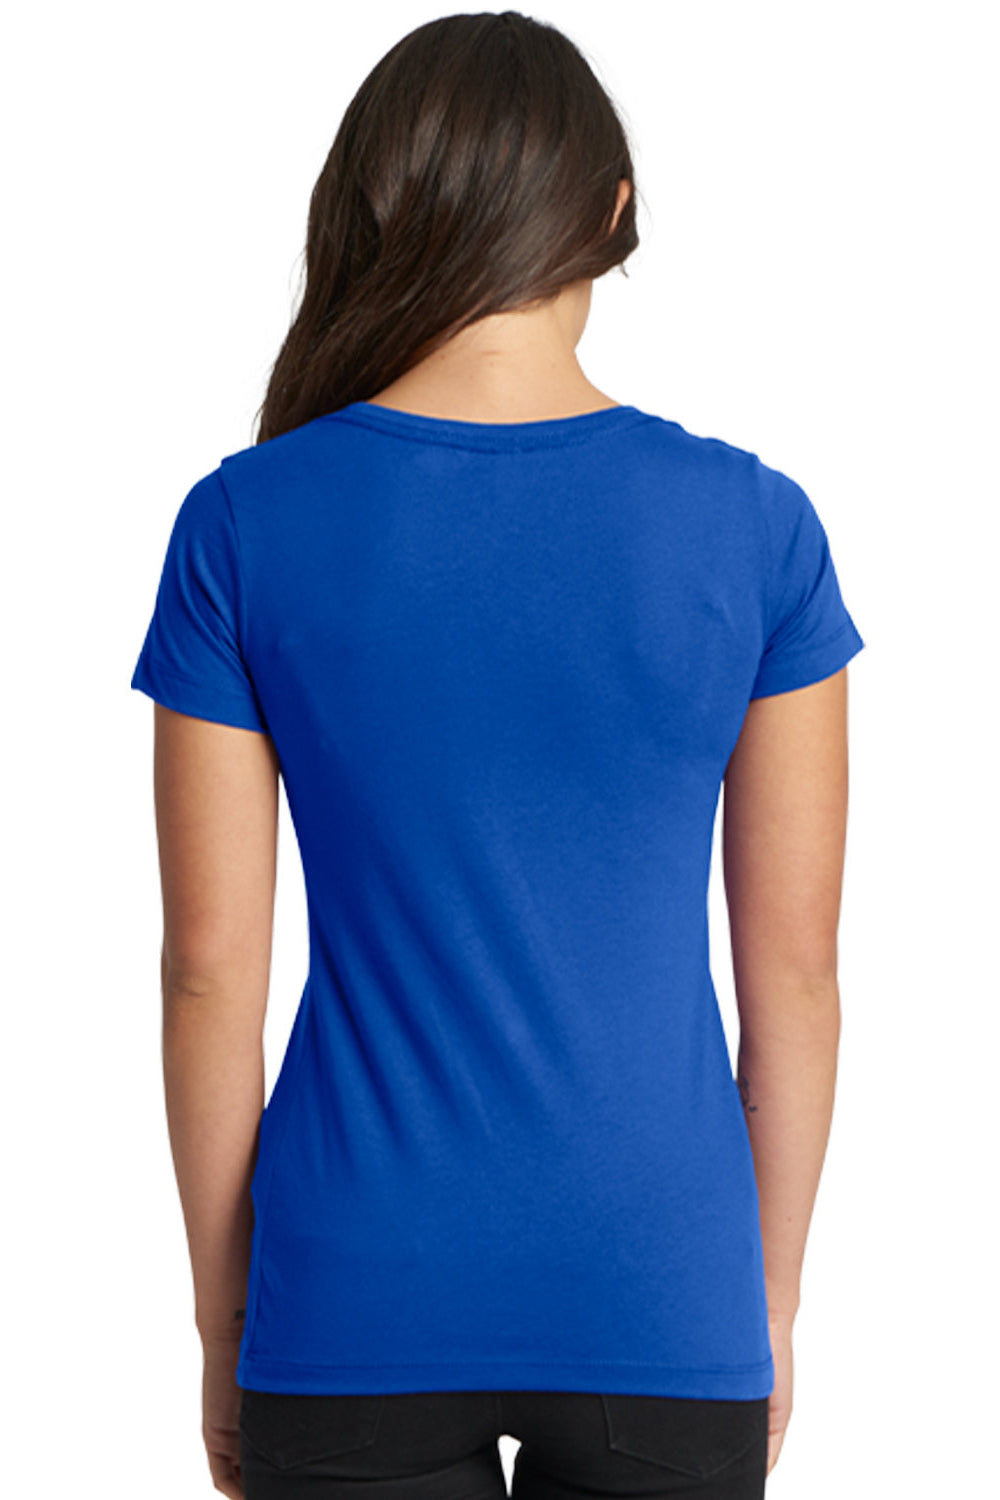 Next Level N1510/1510 Womens Ideal Jersey Short Sleeve Crewneck T-Shirt Royal Blue Back